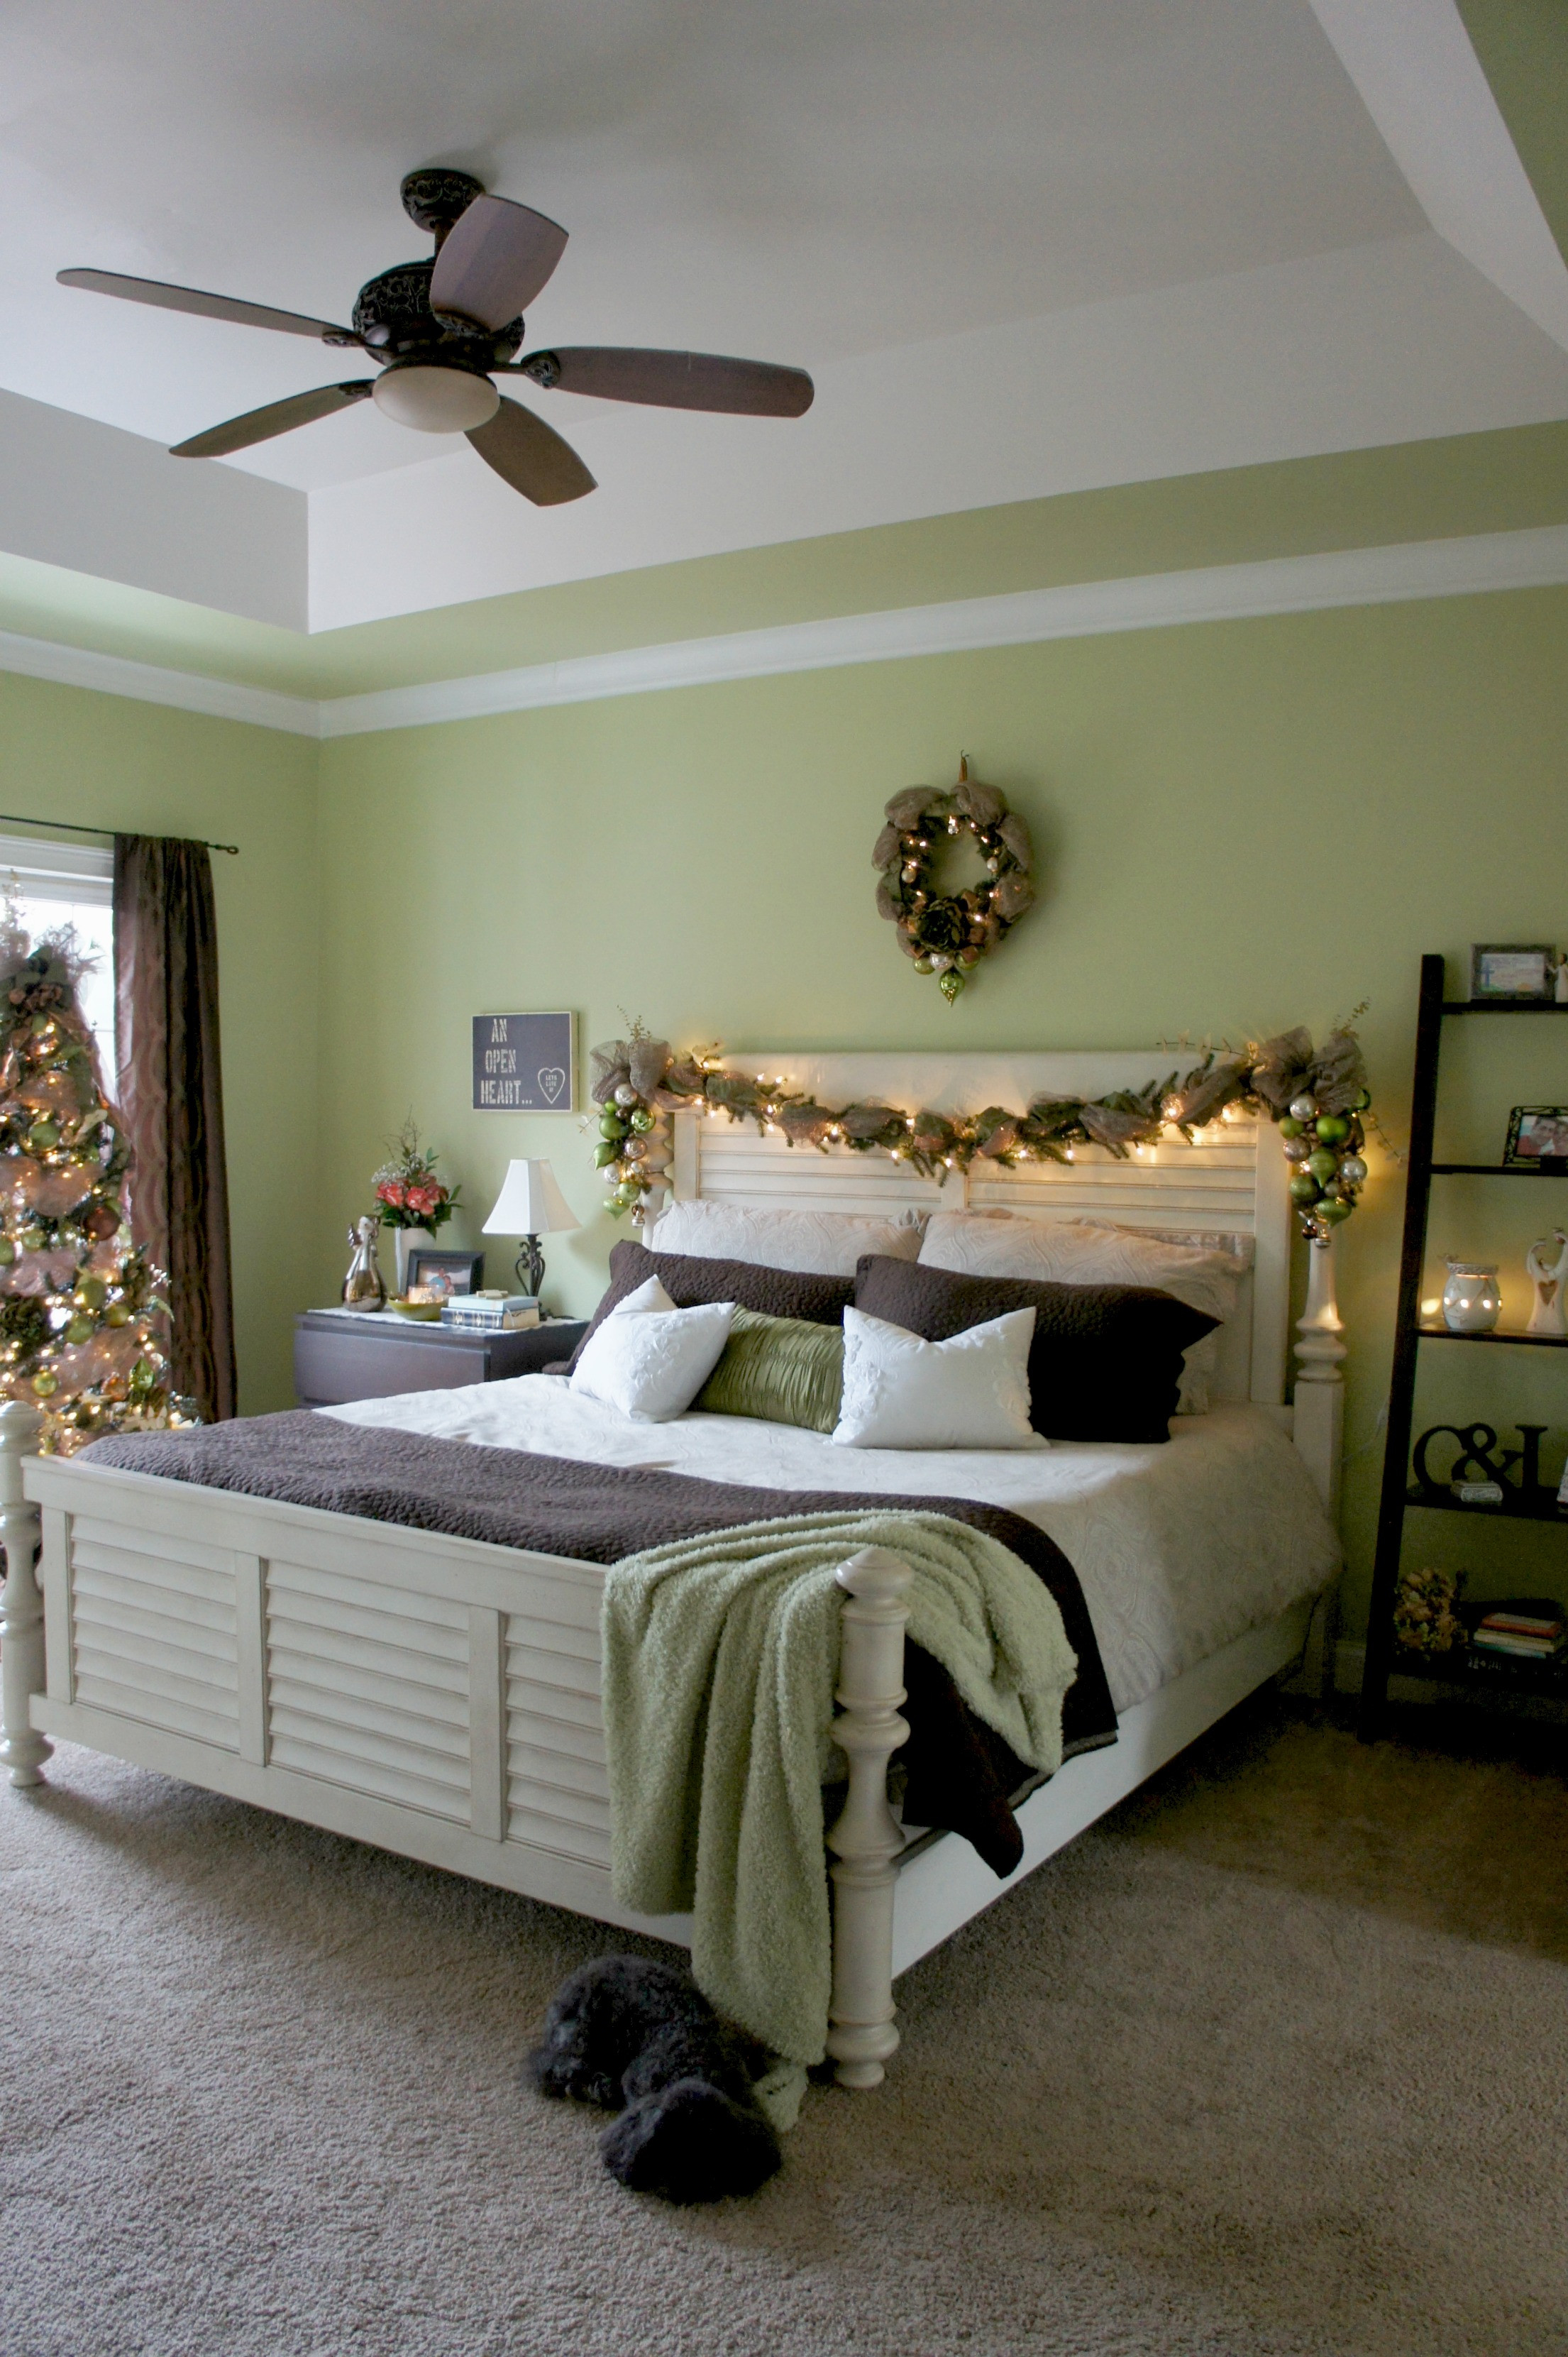 Christmas Bedroom Decoration
 A Christmas Bedroom